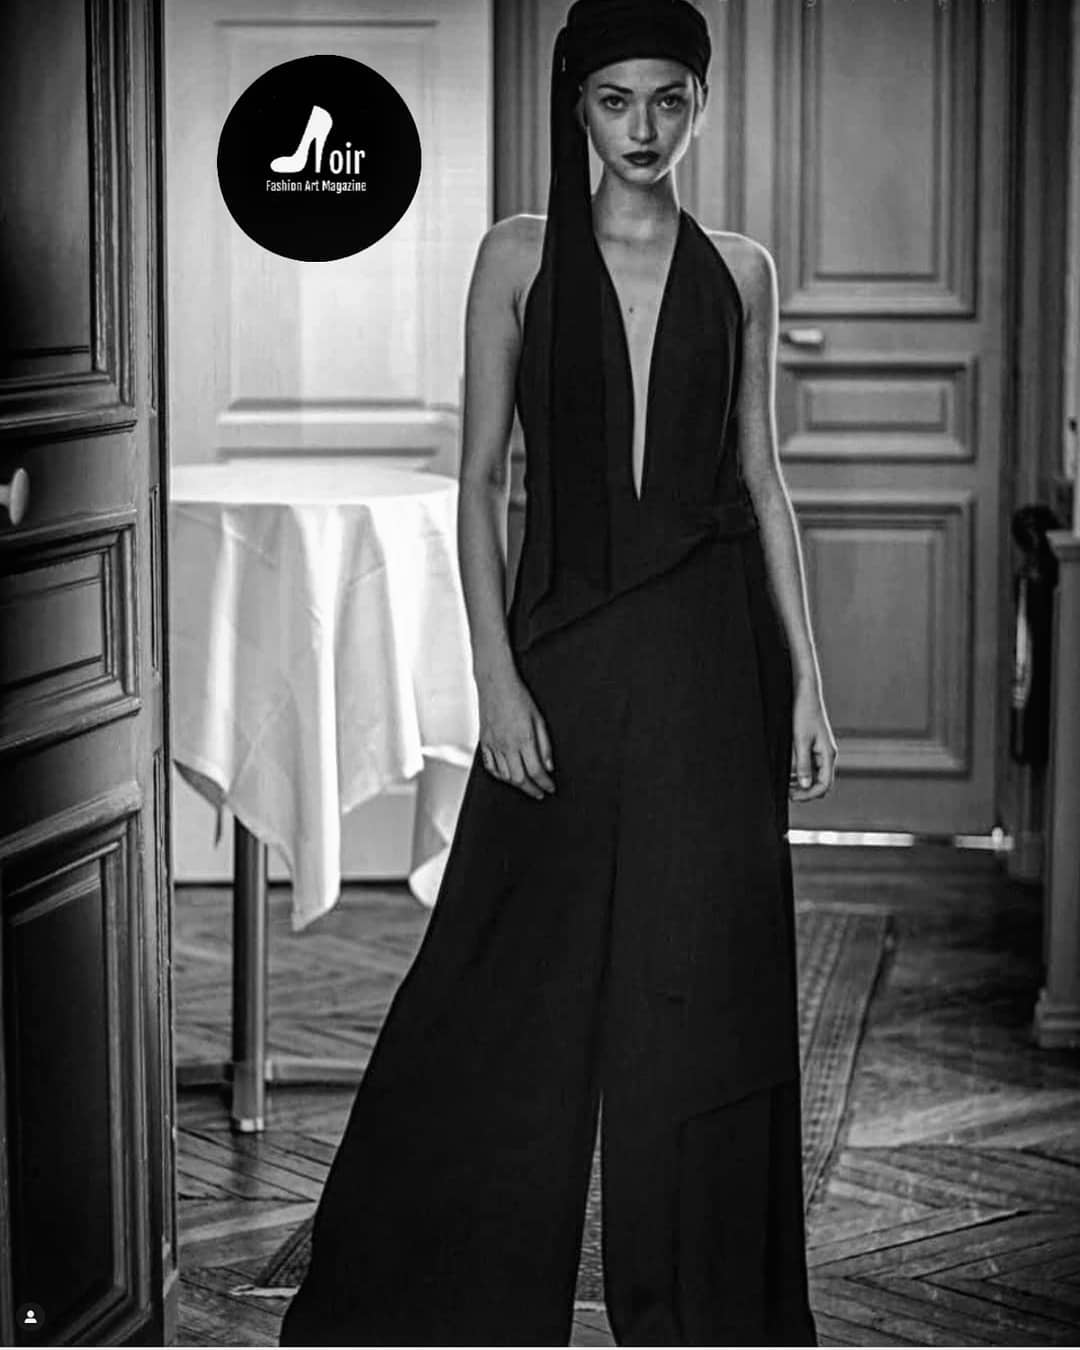 Noir Fashion Style Magazine - Fashion Photography - Editorial Fashion - Noir et blanc - alagraphy